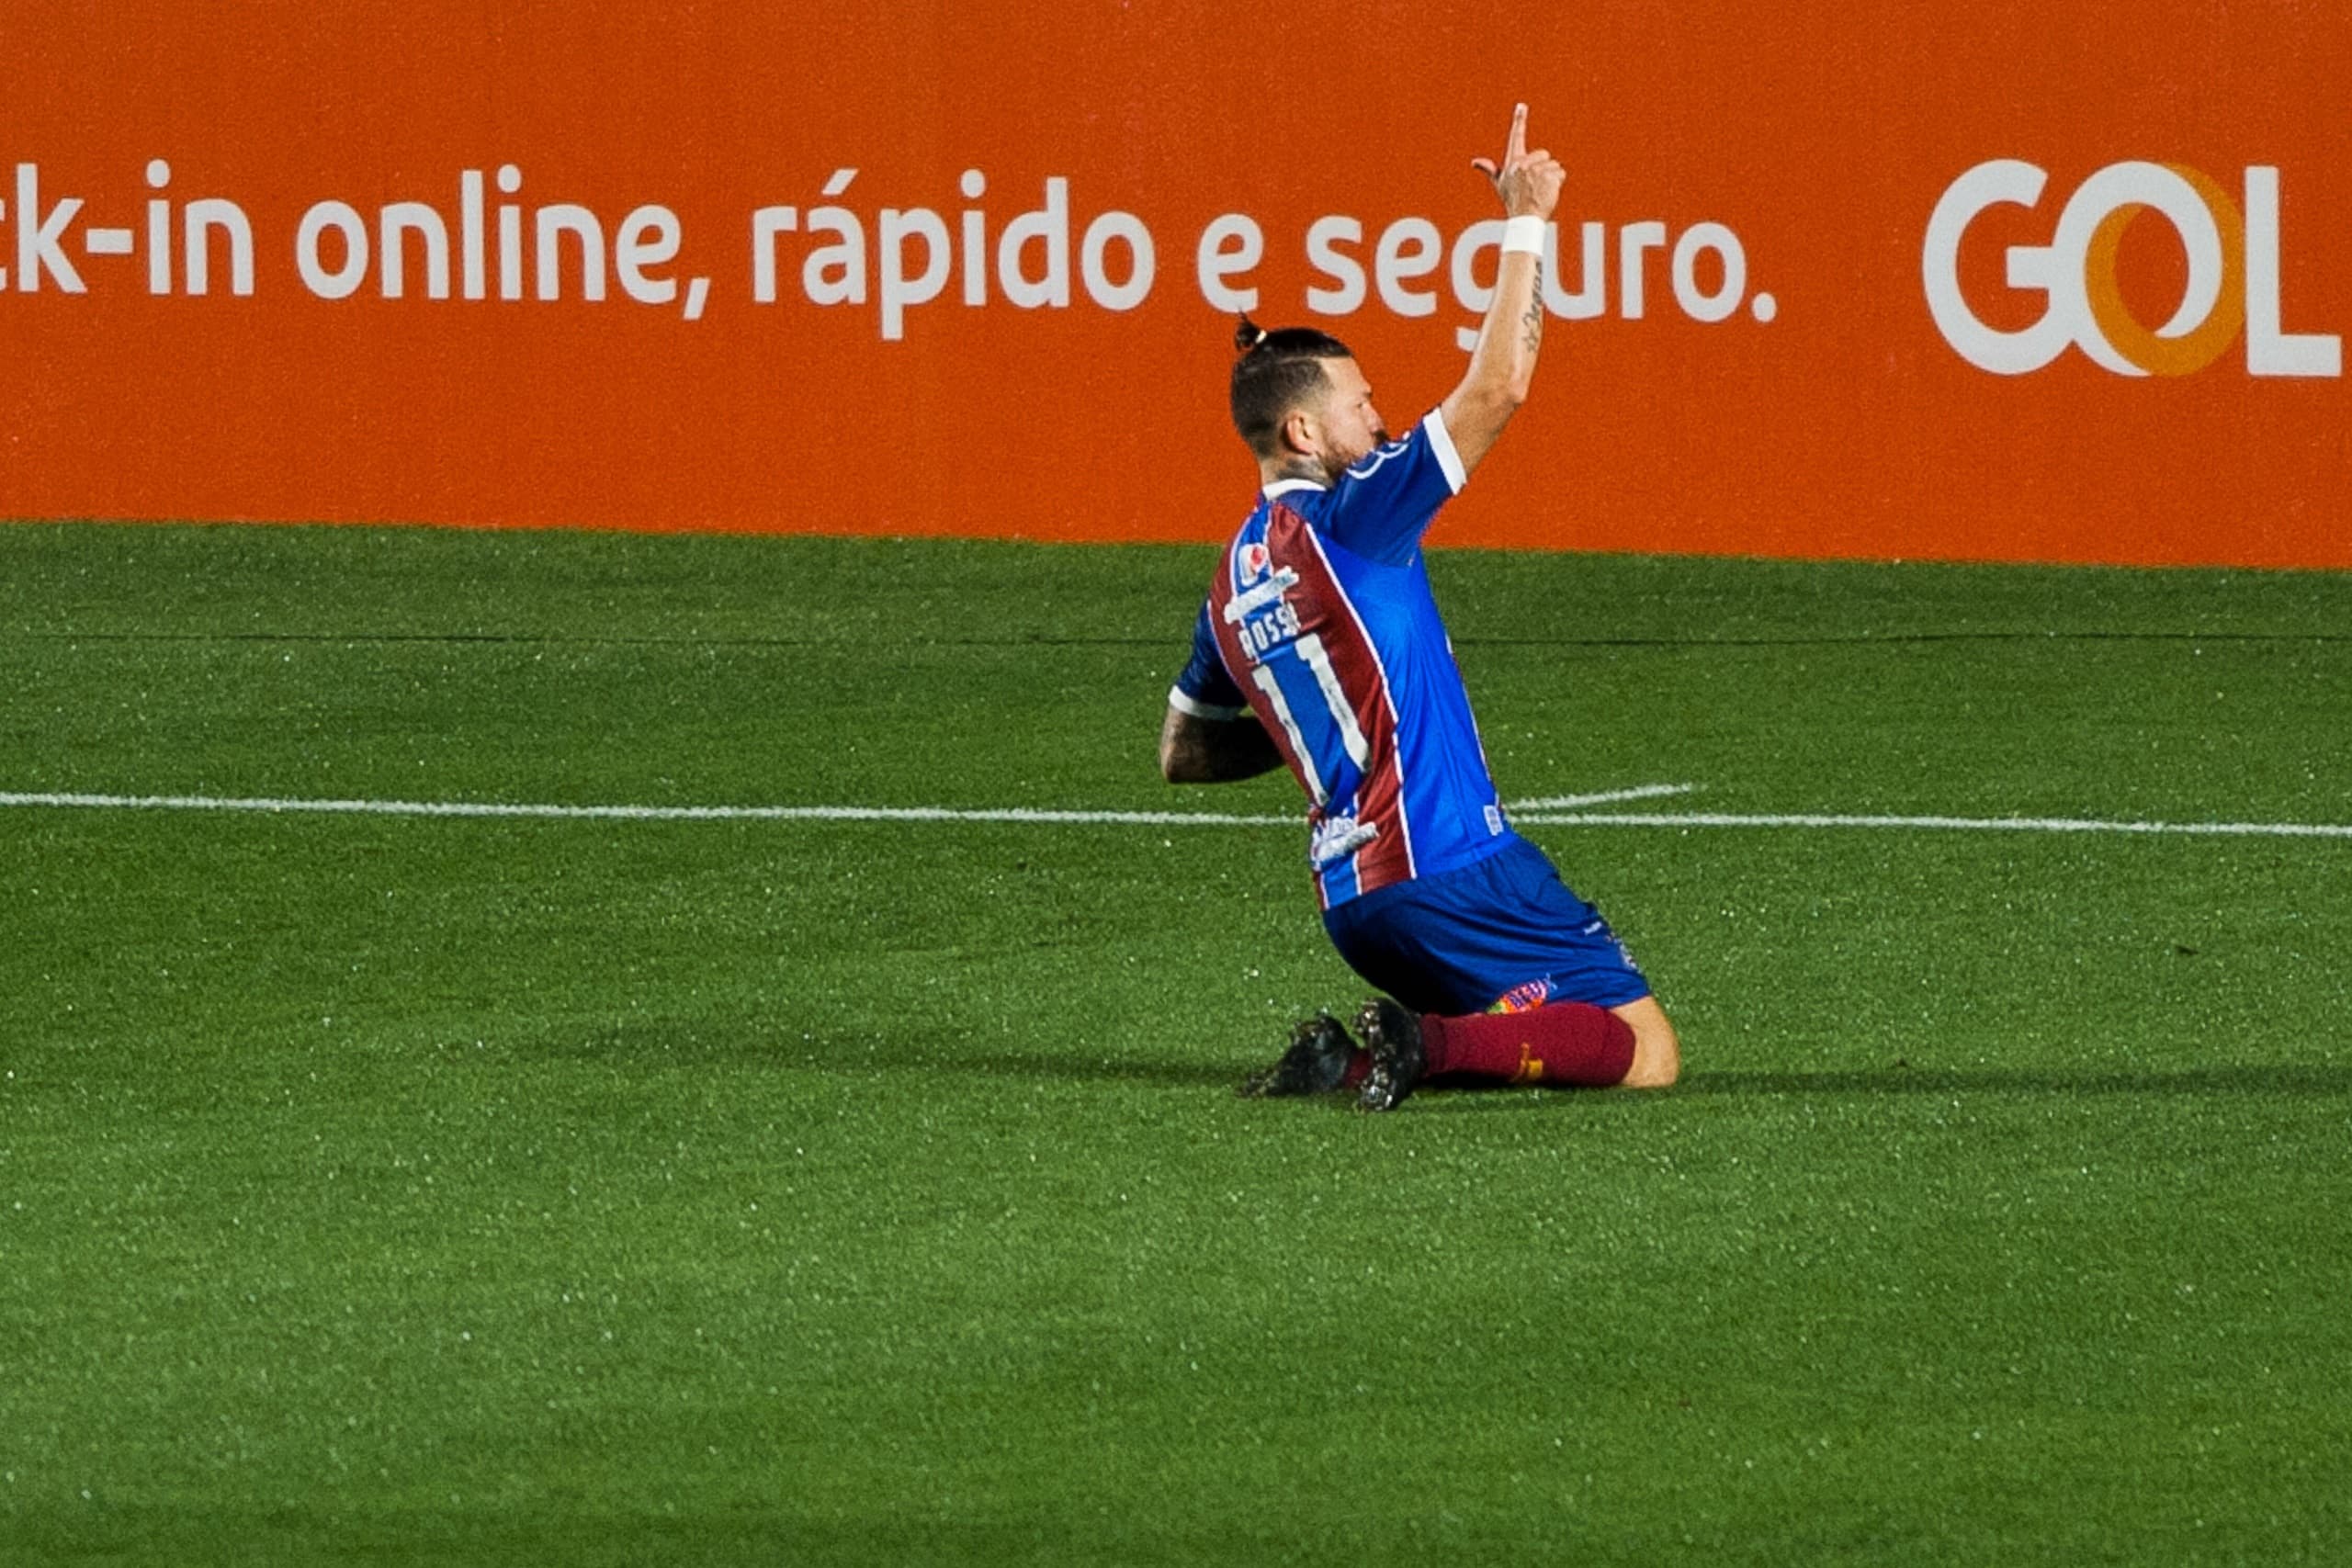 Rossi do Bahia celebrates a goal during a match between São Paulo FC x Bahia